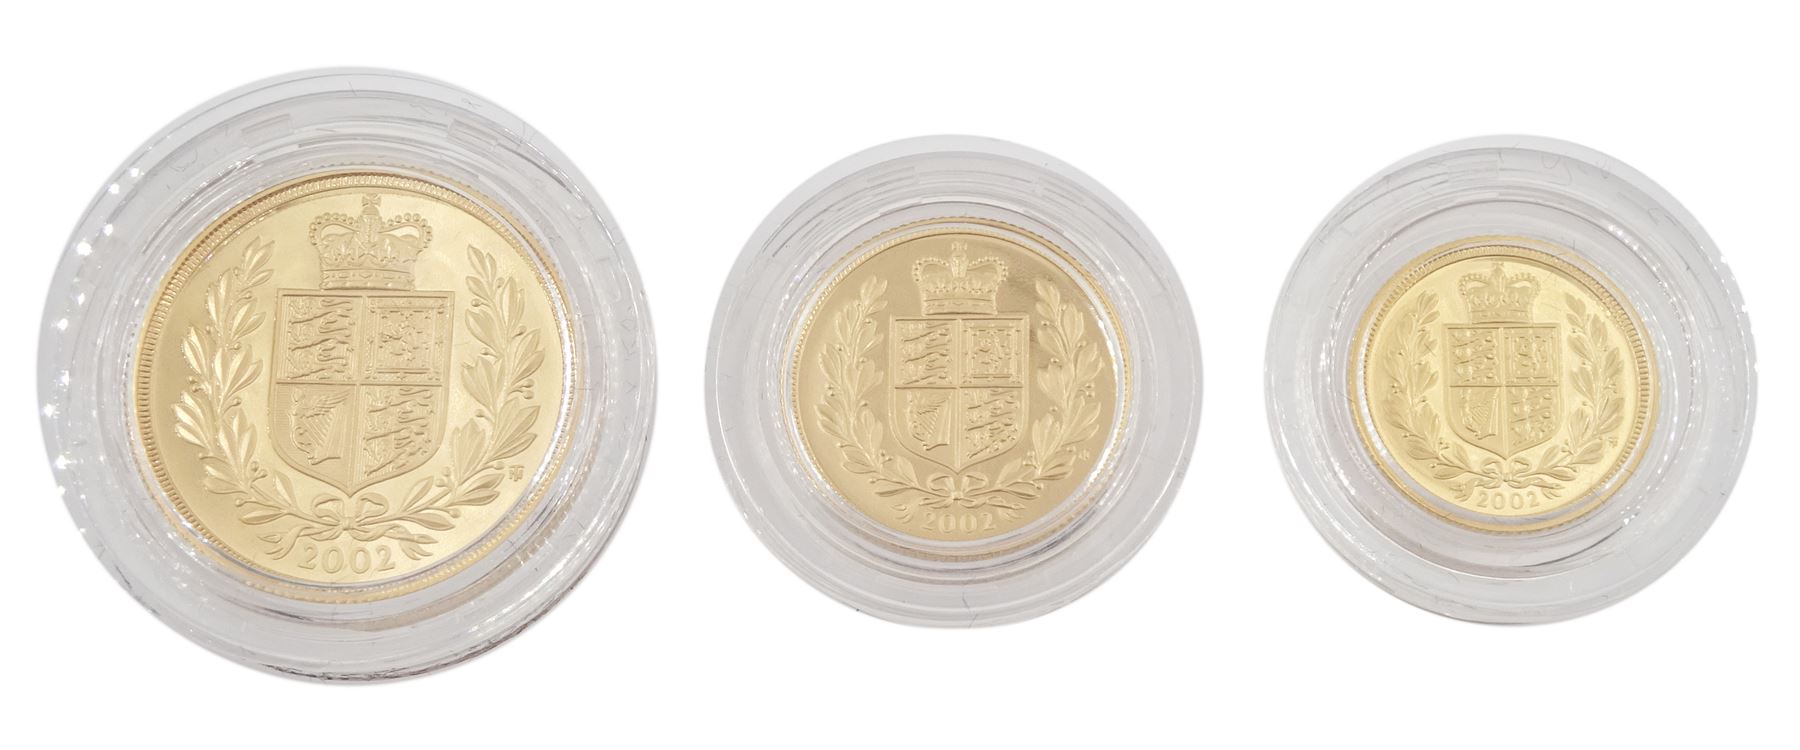 Queen Elizabeth II 'Golden Jubilee' gold proof three-coin shield back sovereign set - Image 3 of 3